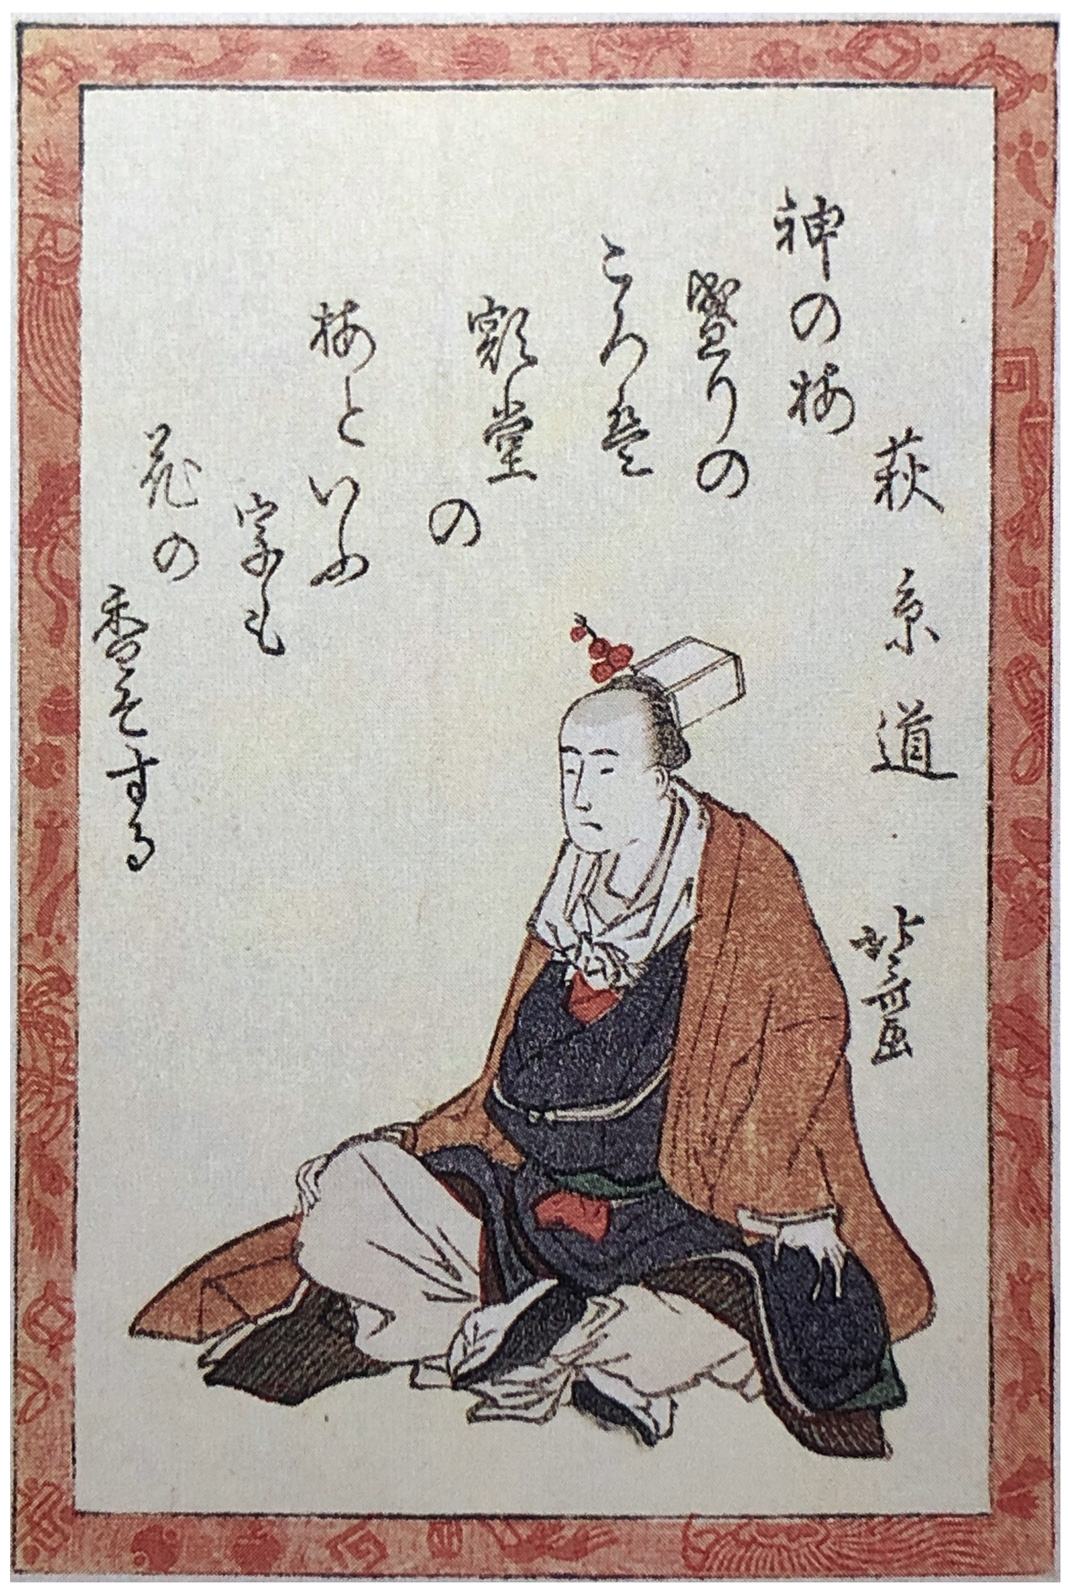 Hokusai - Poet #23 - 100 Kyoka Poets